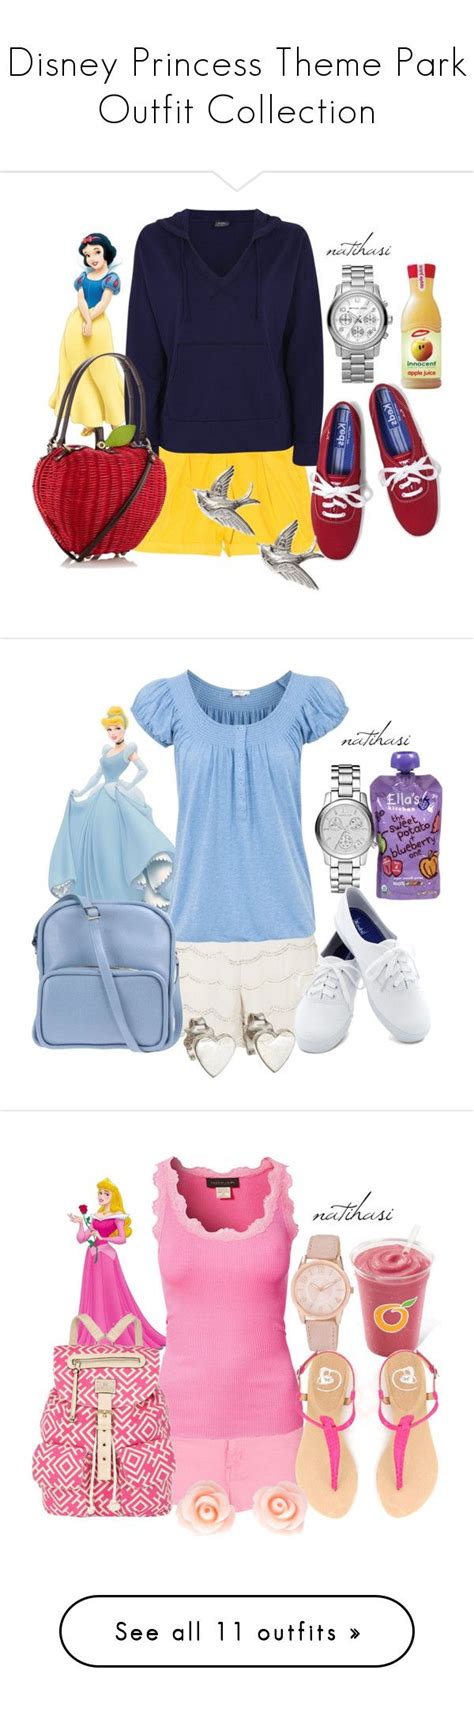 Disney Princess Theme Park Outfit Collection Theme Park Outfits Disney Princess Theme